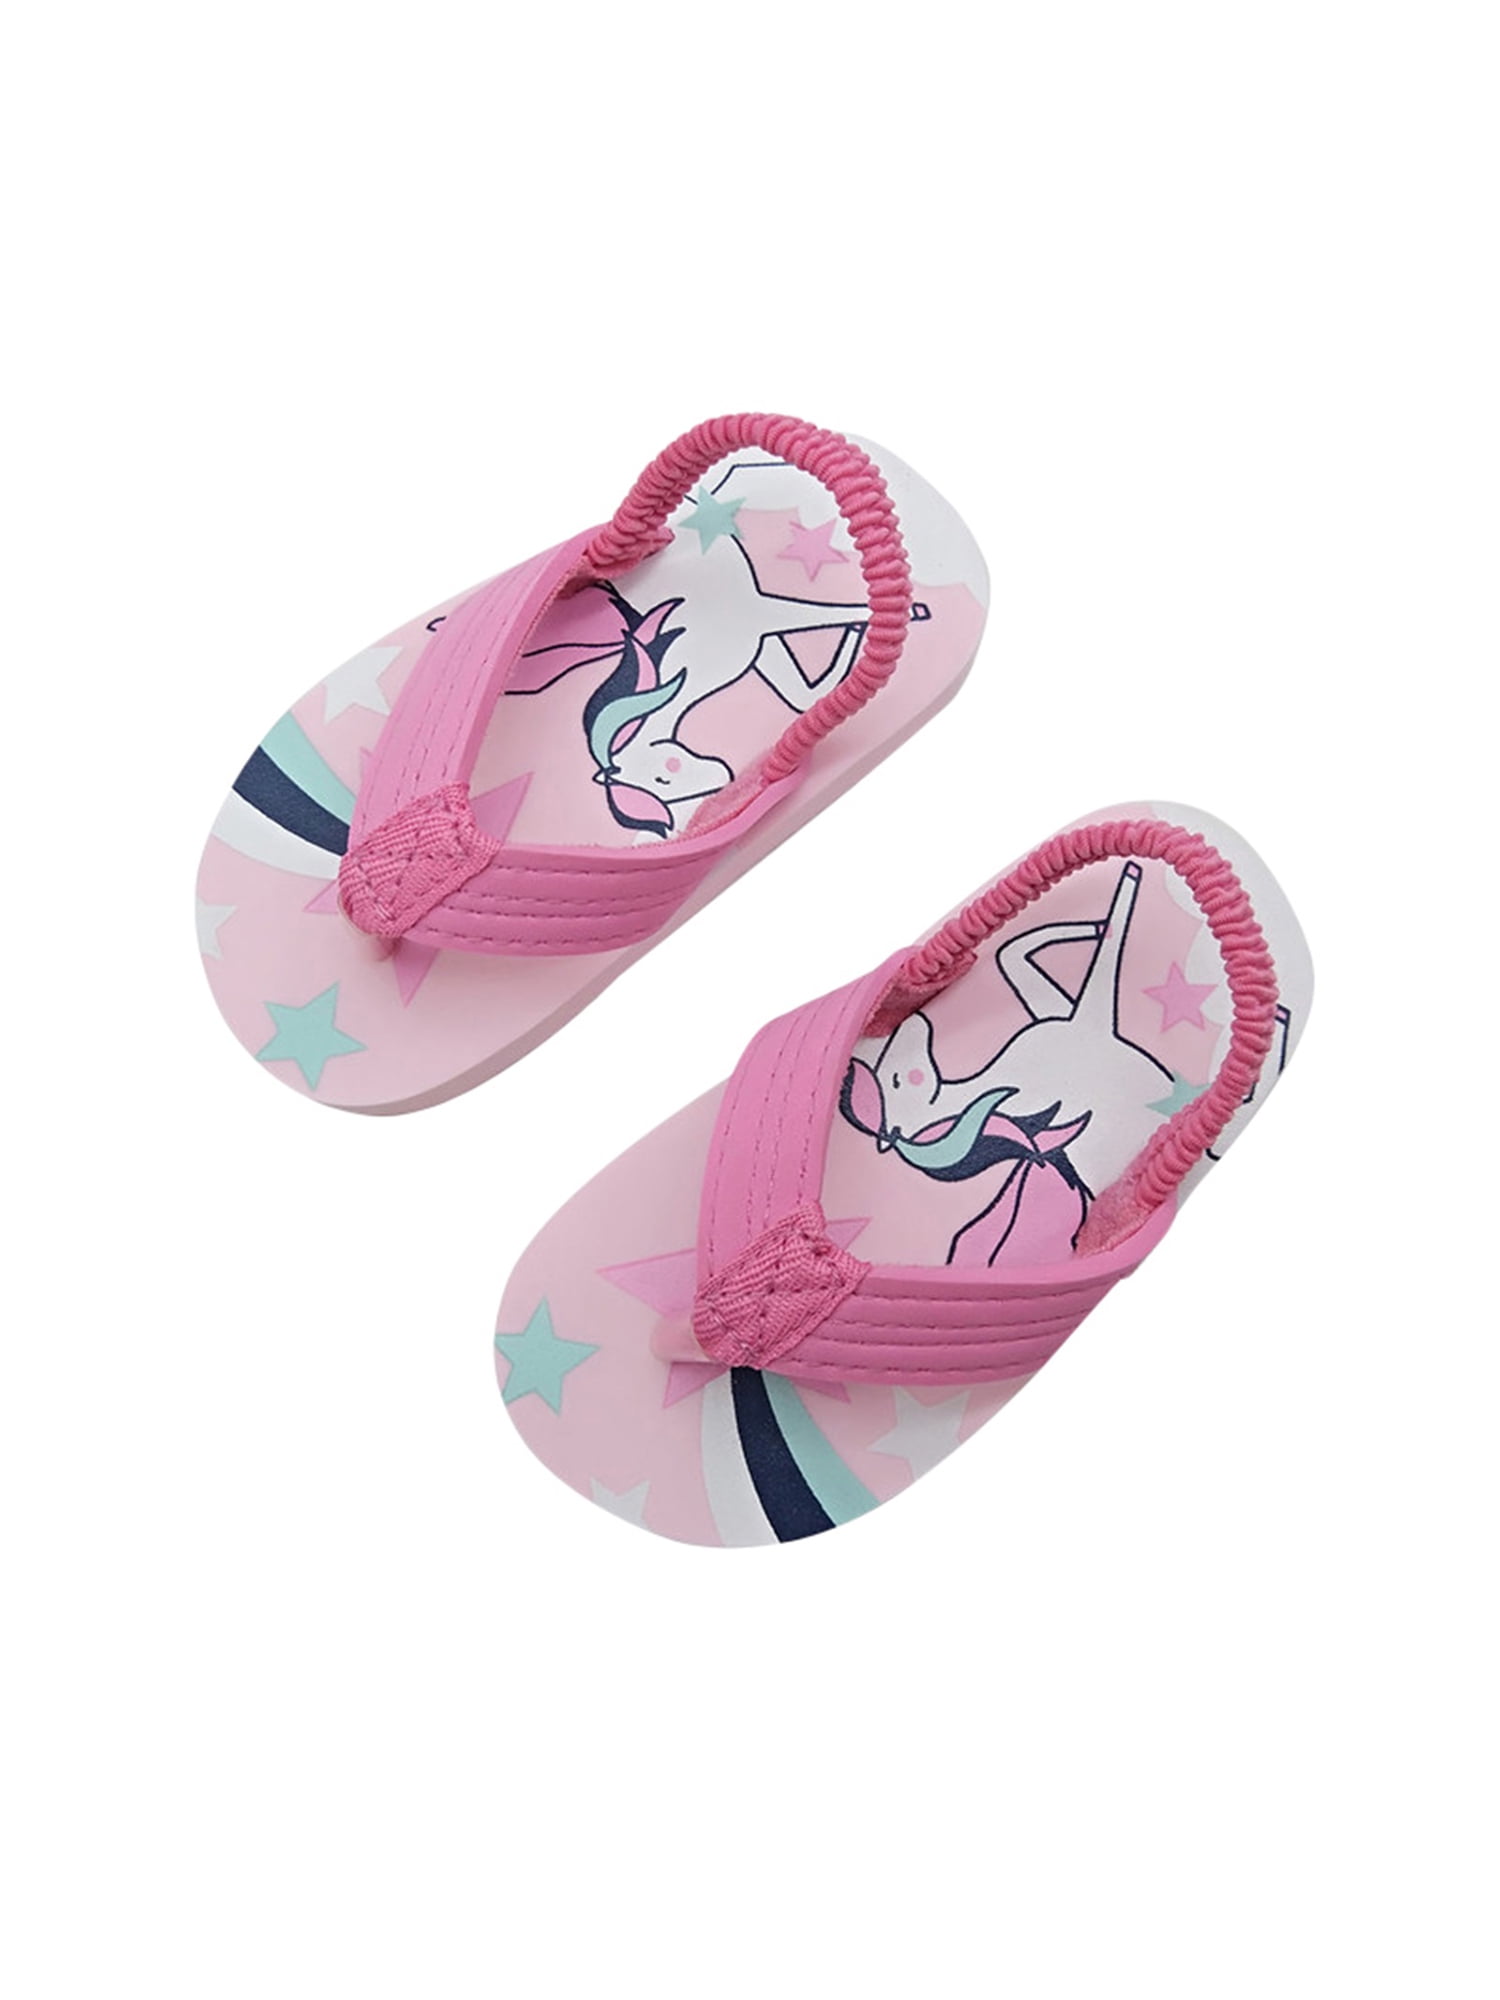 Toddler Flip Flops Girls Unicorn Beach/Pool Flip Flops With Backstrap Slip On Sandals Little Kids Water Shoes 